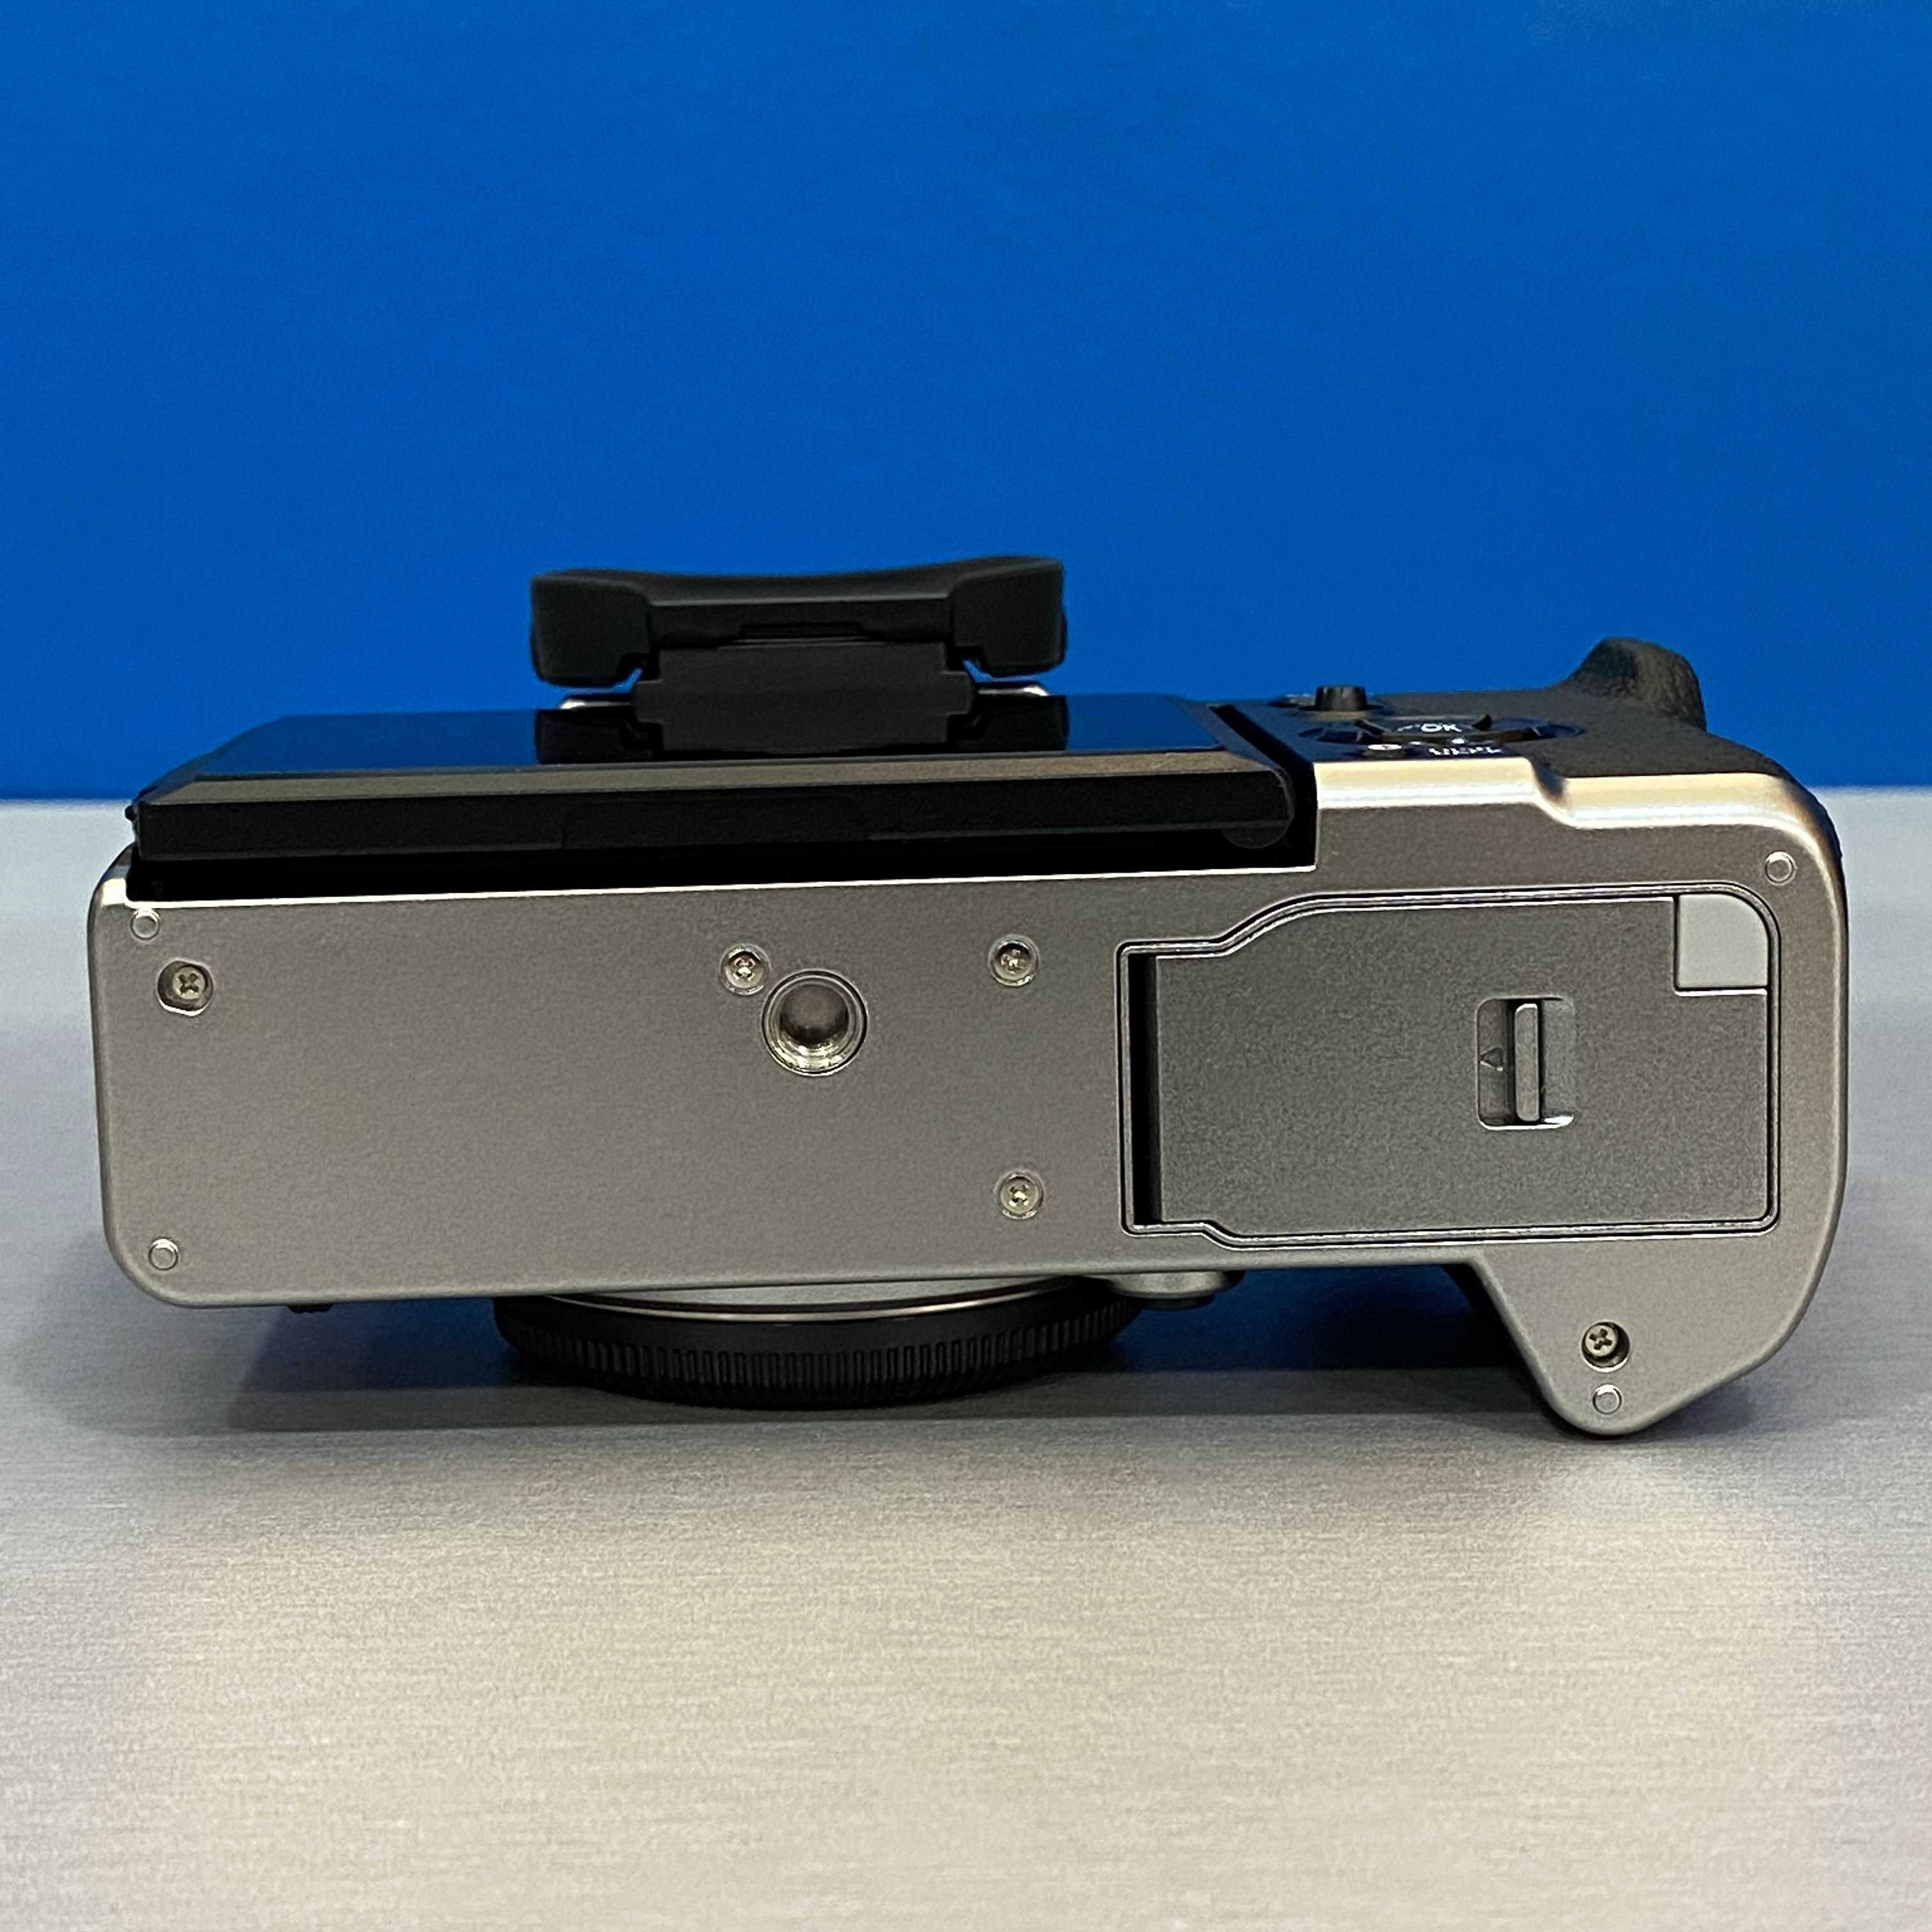 Fujifilm X-T5 (40MP) + XF 16-80mm f/4 R - NOVA - 3 ANOS DE GARANTIA